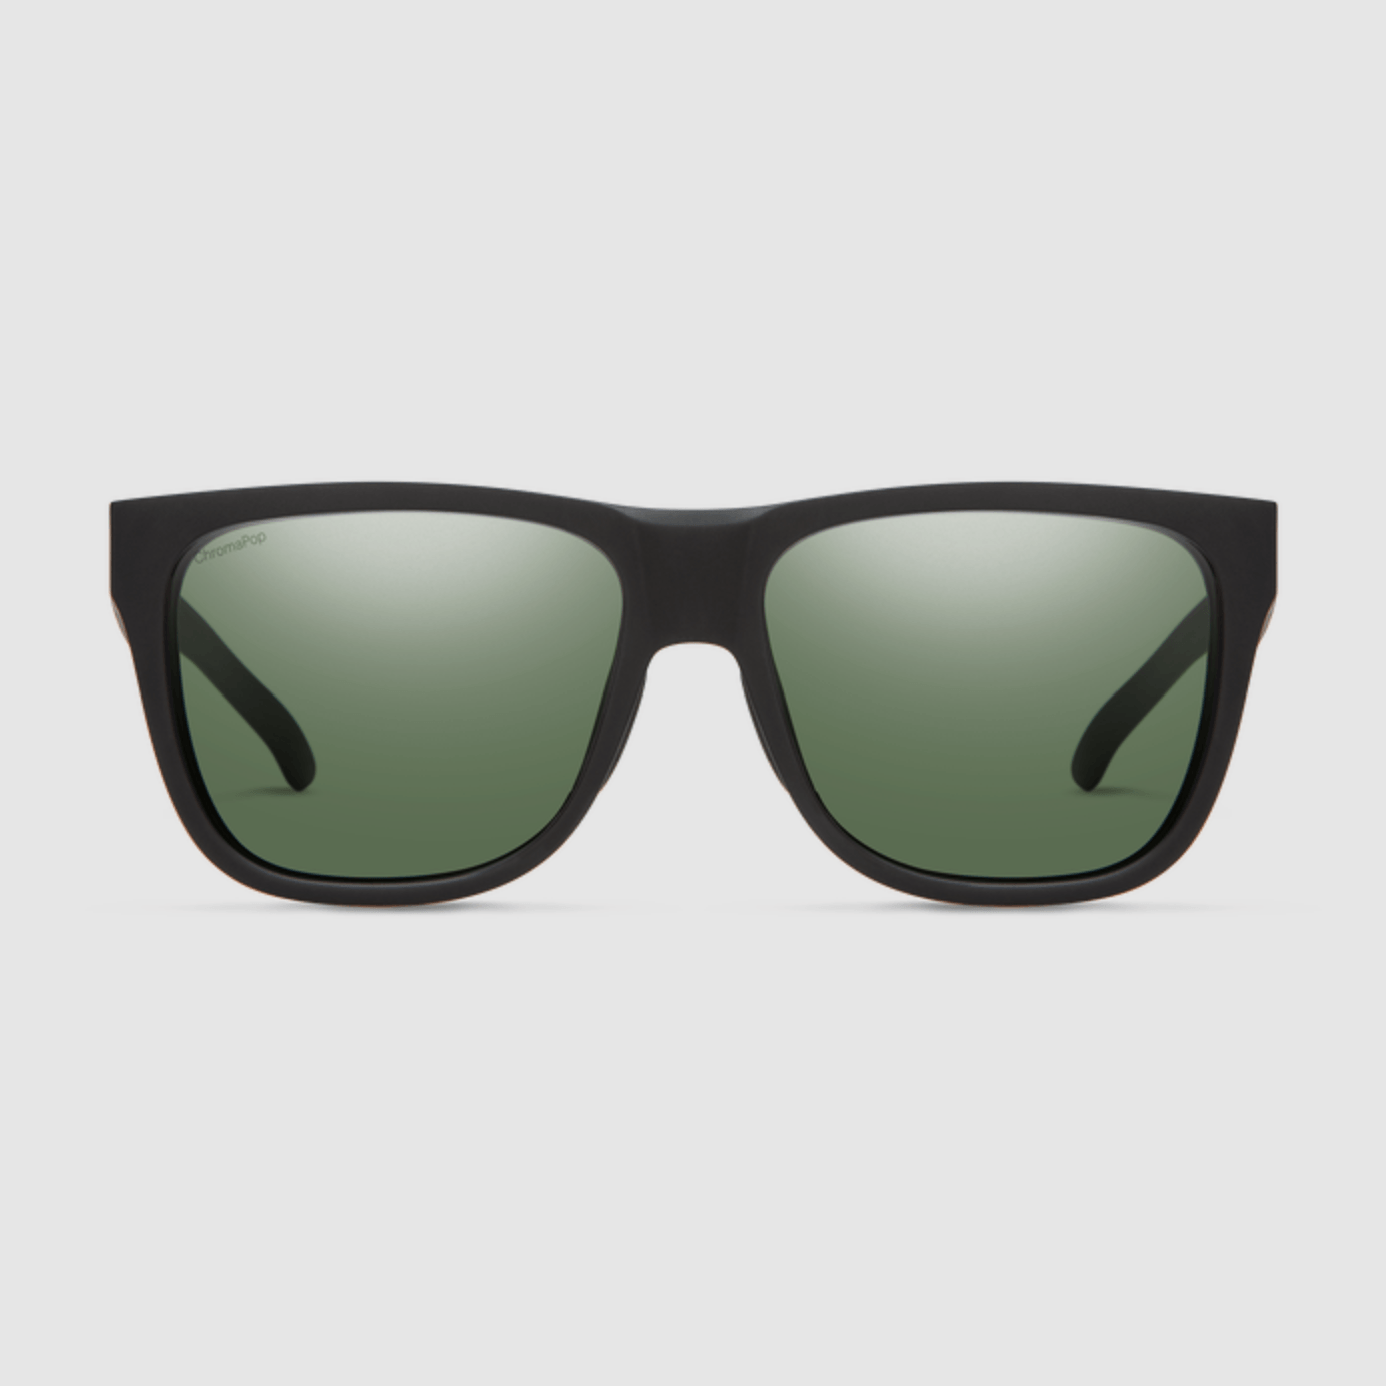 SMITH Lowdown 2 Matte Black - ChromaPop Grey Green Polarized Sunglasses Sunglasses Smith 